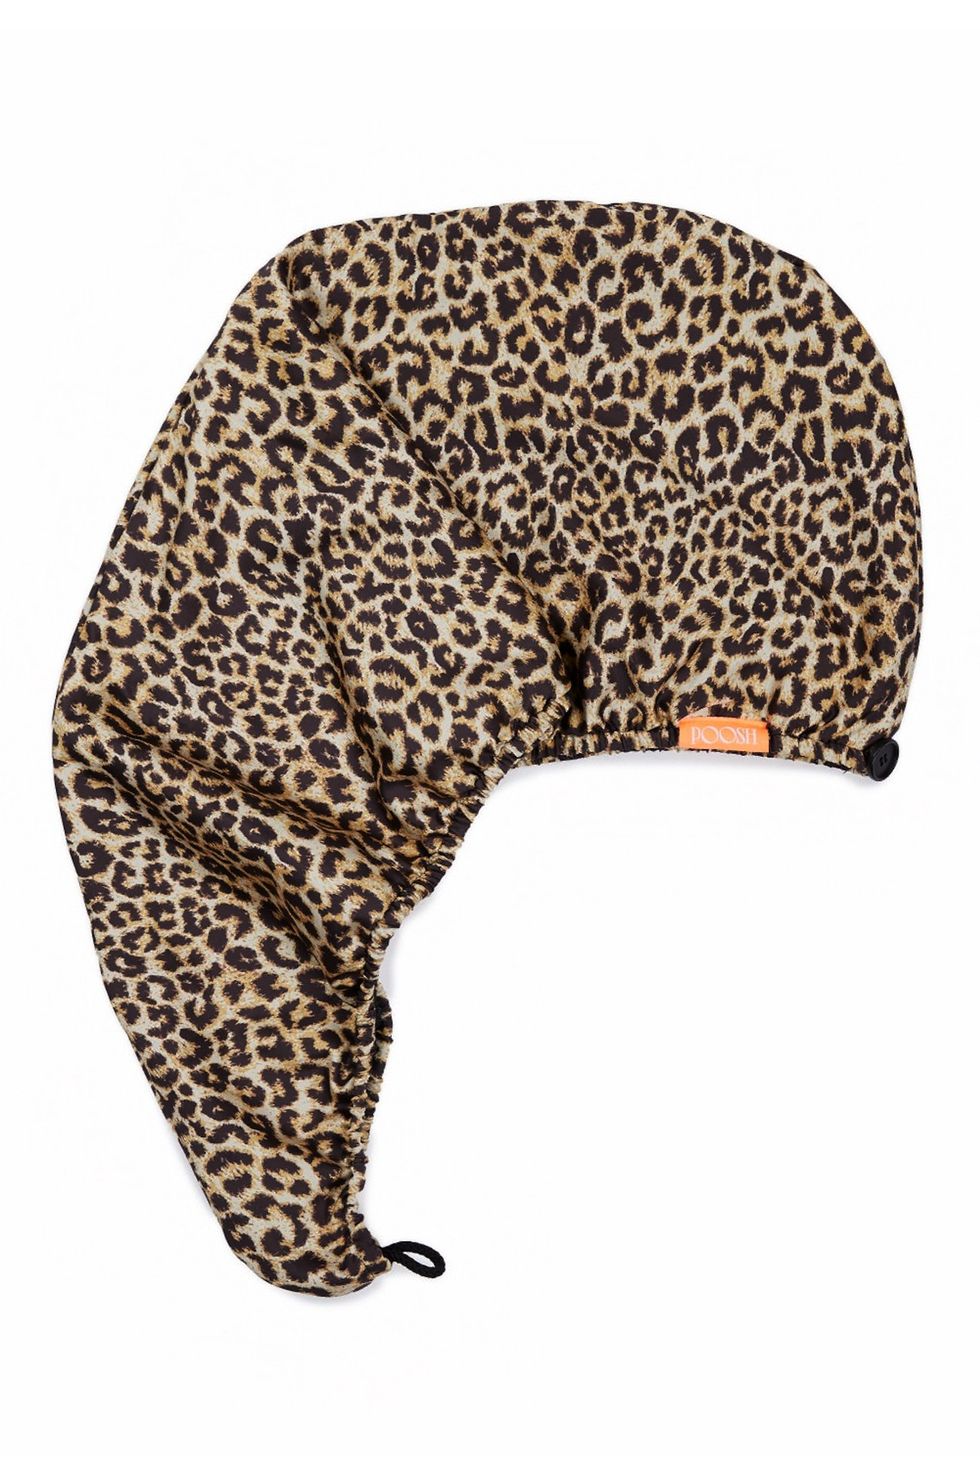 Rapid Dry Leopard Print Hair Turban